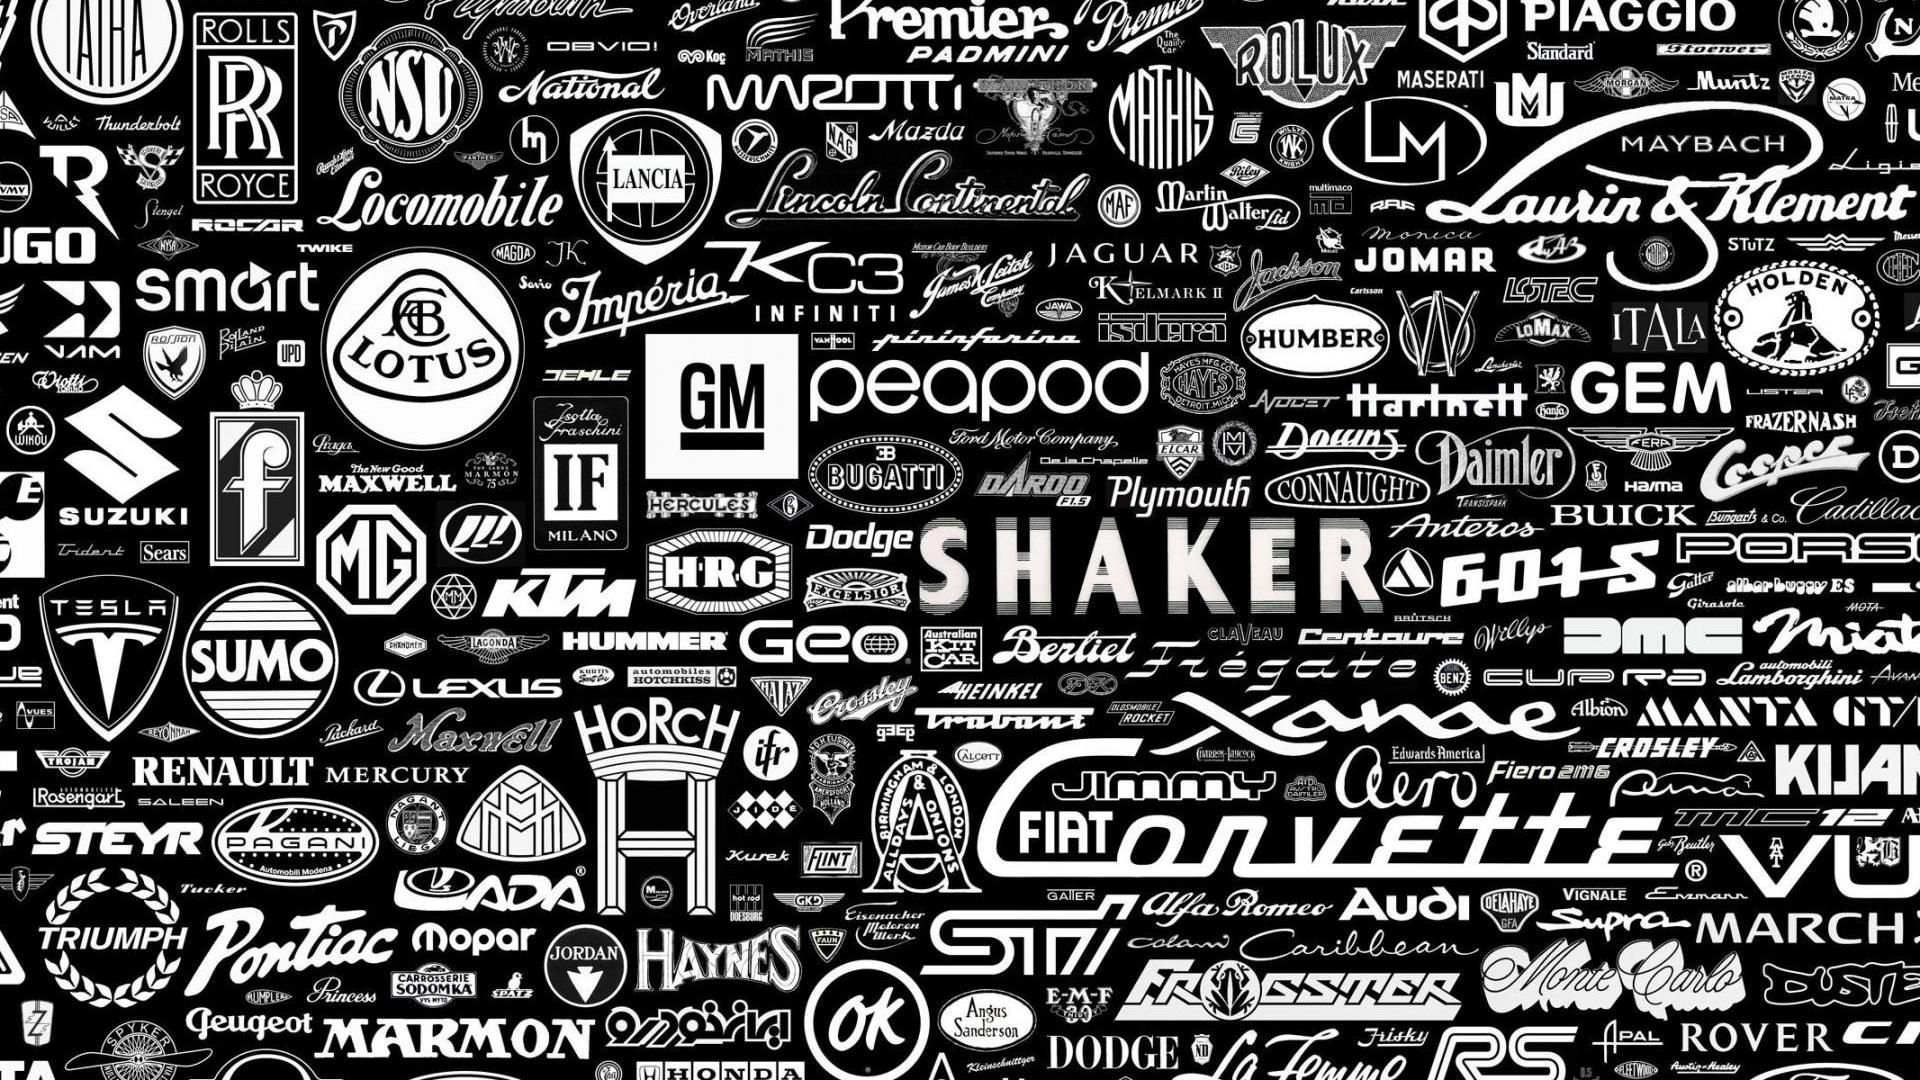 Logos Wallpaper Group Wallpaper House.com